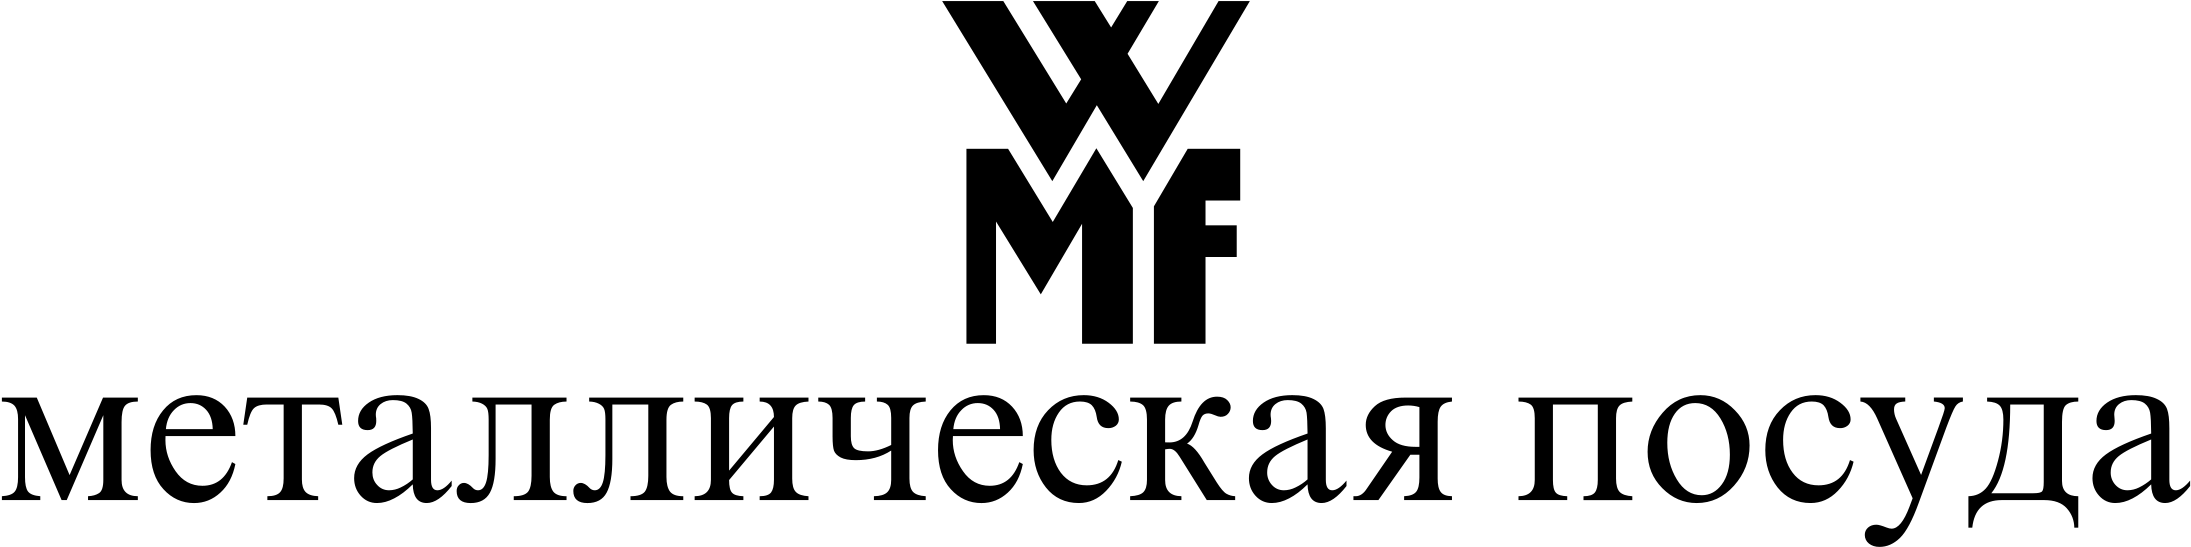 Wmf Logo Png Transparent - Wmf Group (2400x2400), Png Download